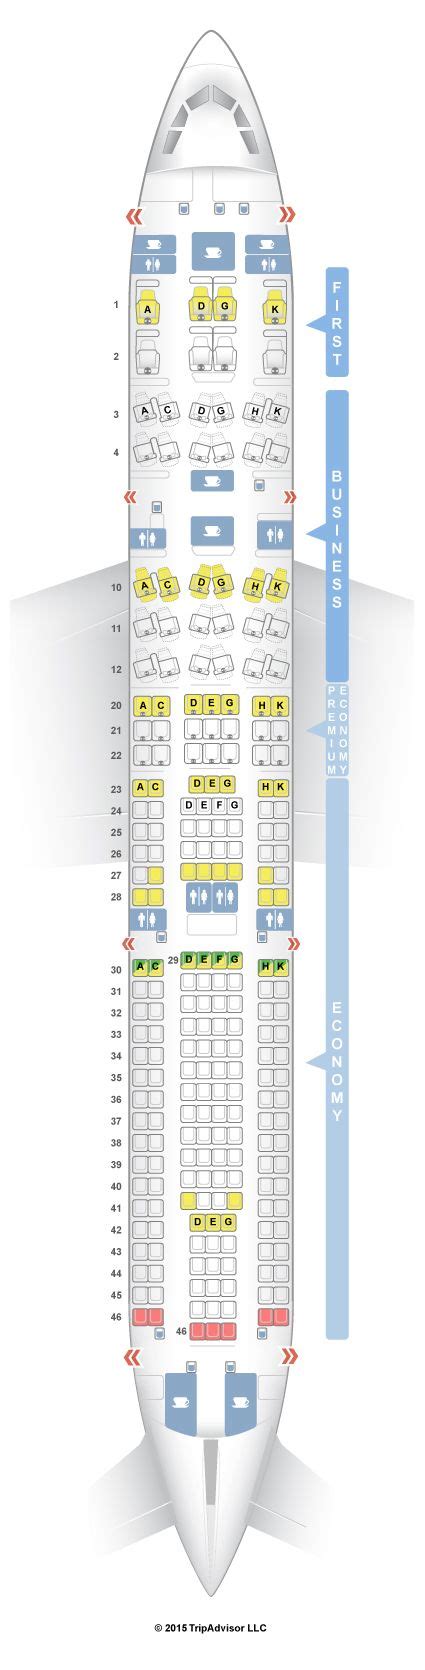 Seatguru Seat Map Lufthansa Airbus A330 300 333 V1 Seatguru A330